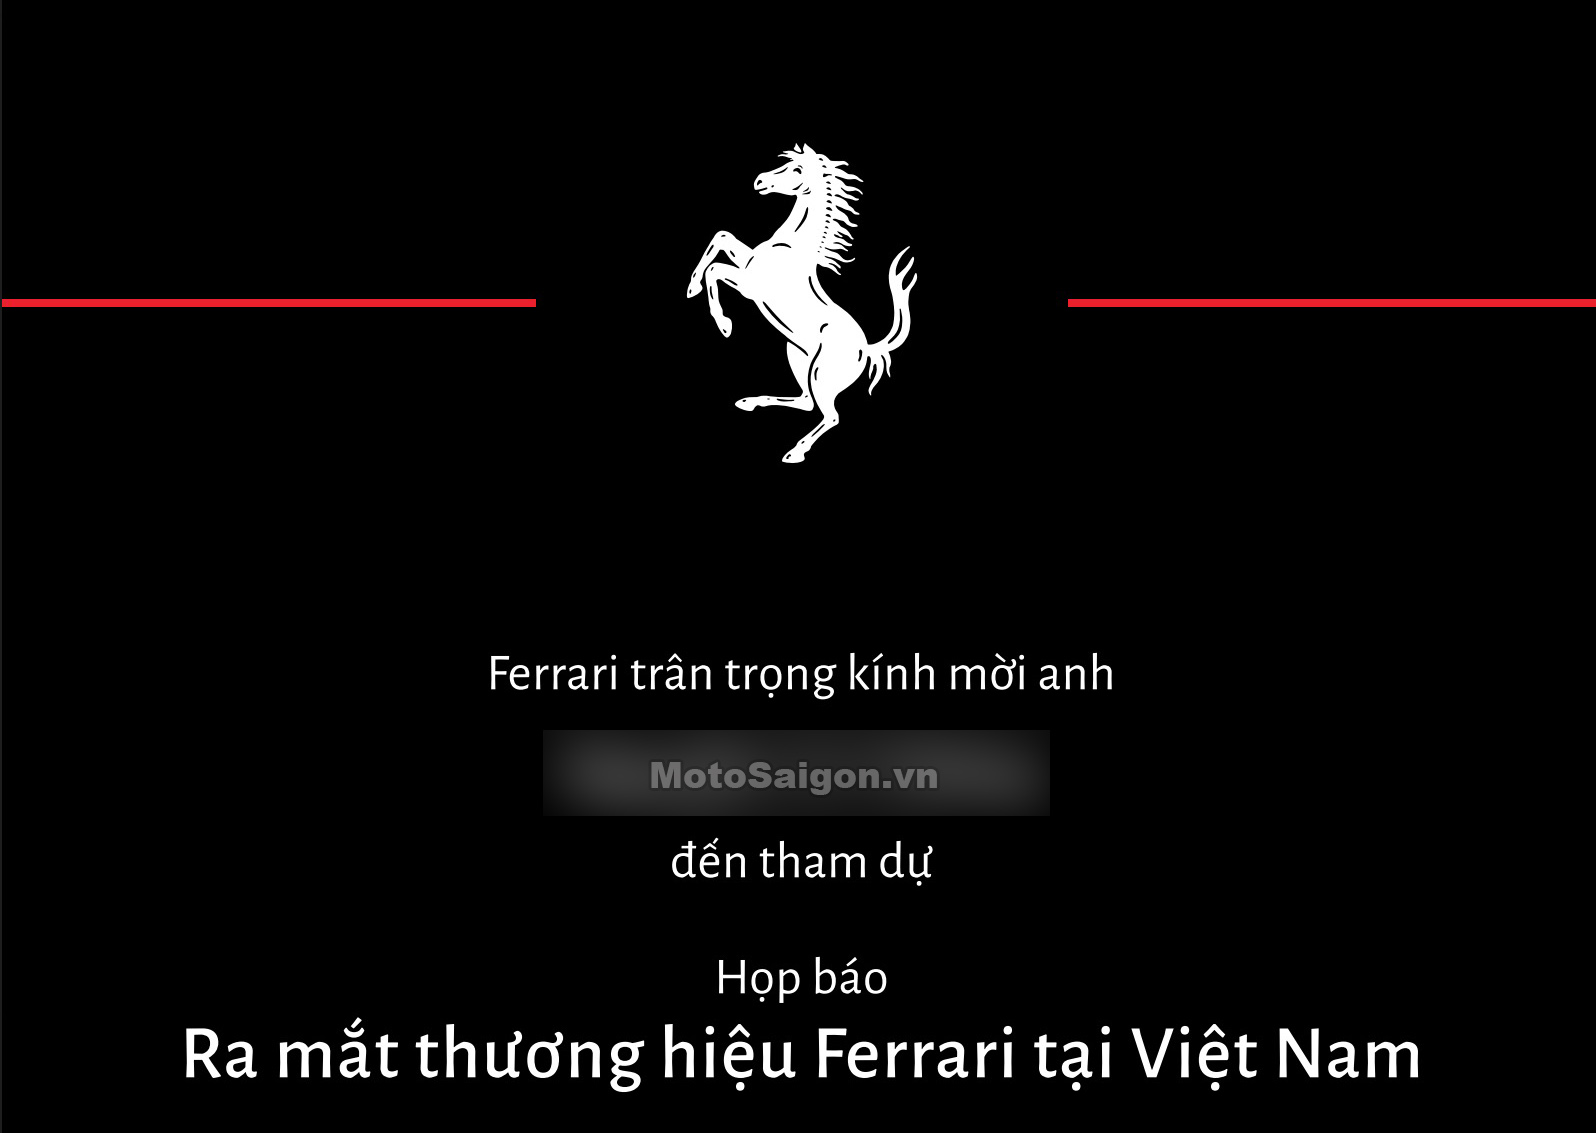 Showroom Ferrari Việt Nam sắp khai trương tại Quận 7 TPHCM